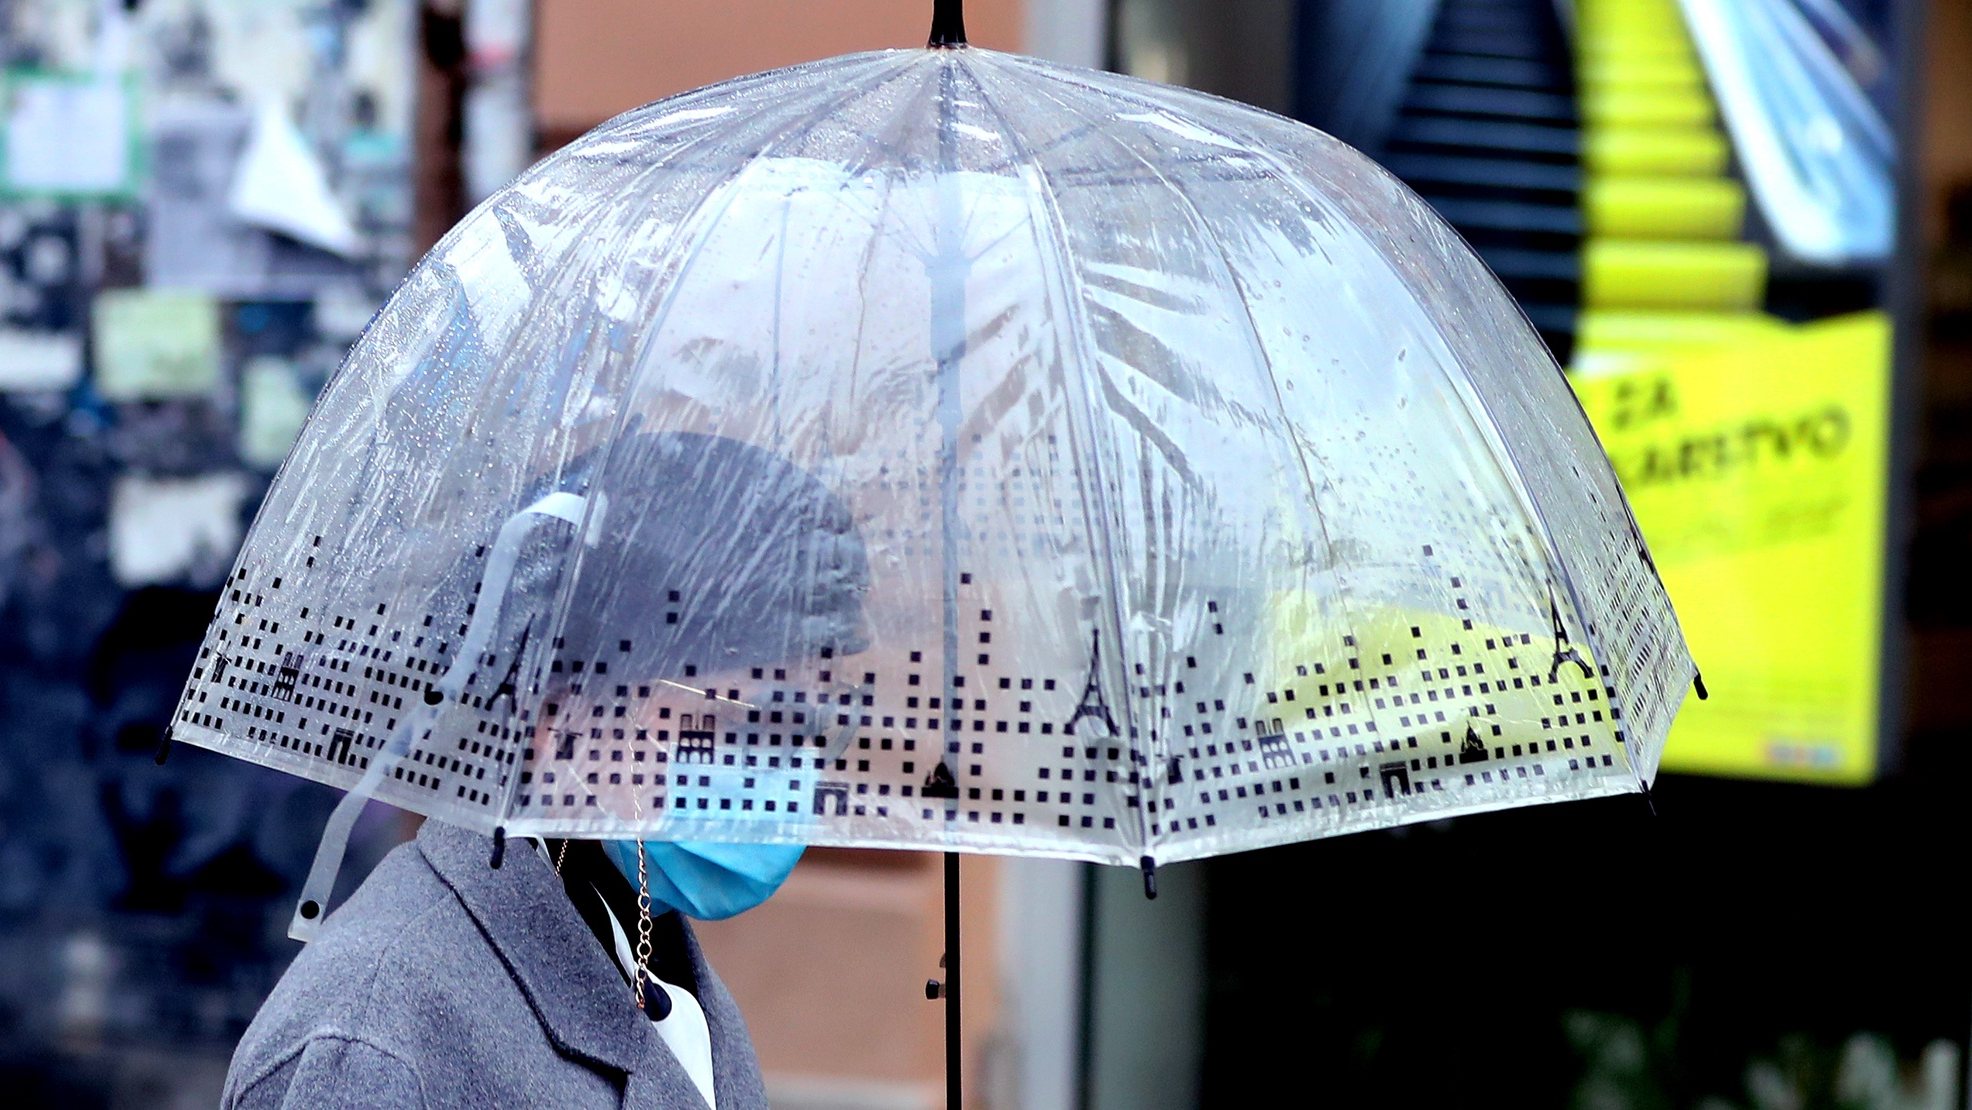 epa08830893 A woman wearing face mask walks holding an umbrella during rain in Sarajevo, Bosnia and Herzegovina, 20 November 2020.  EPA/FEHIM DEMIR